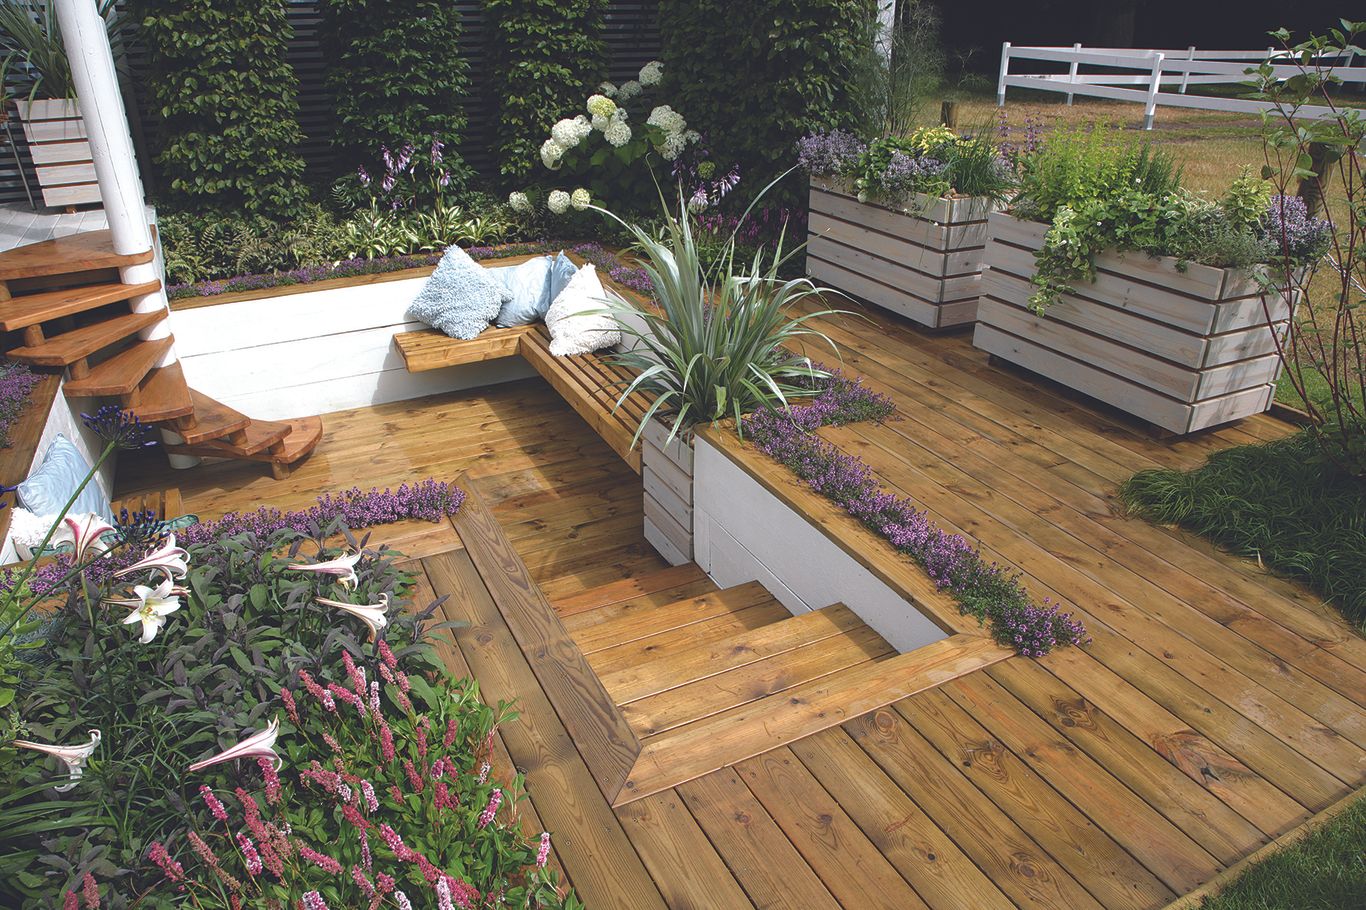  garden decking area ideas